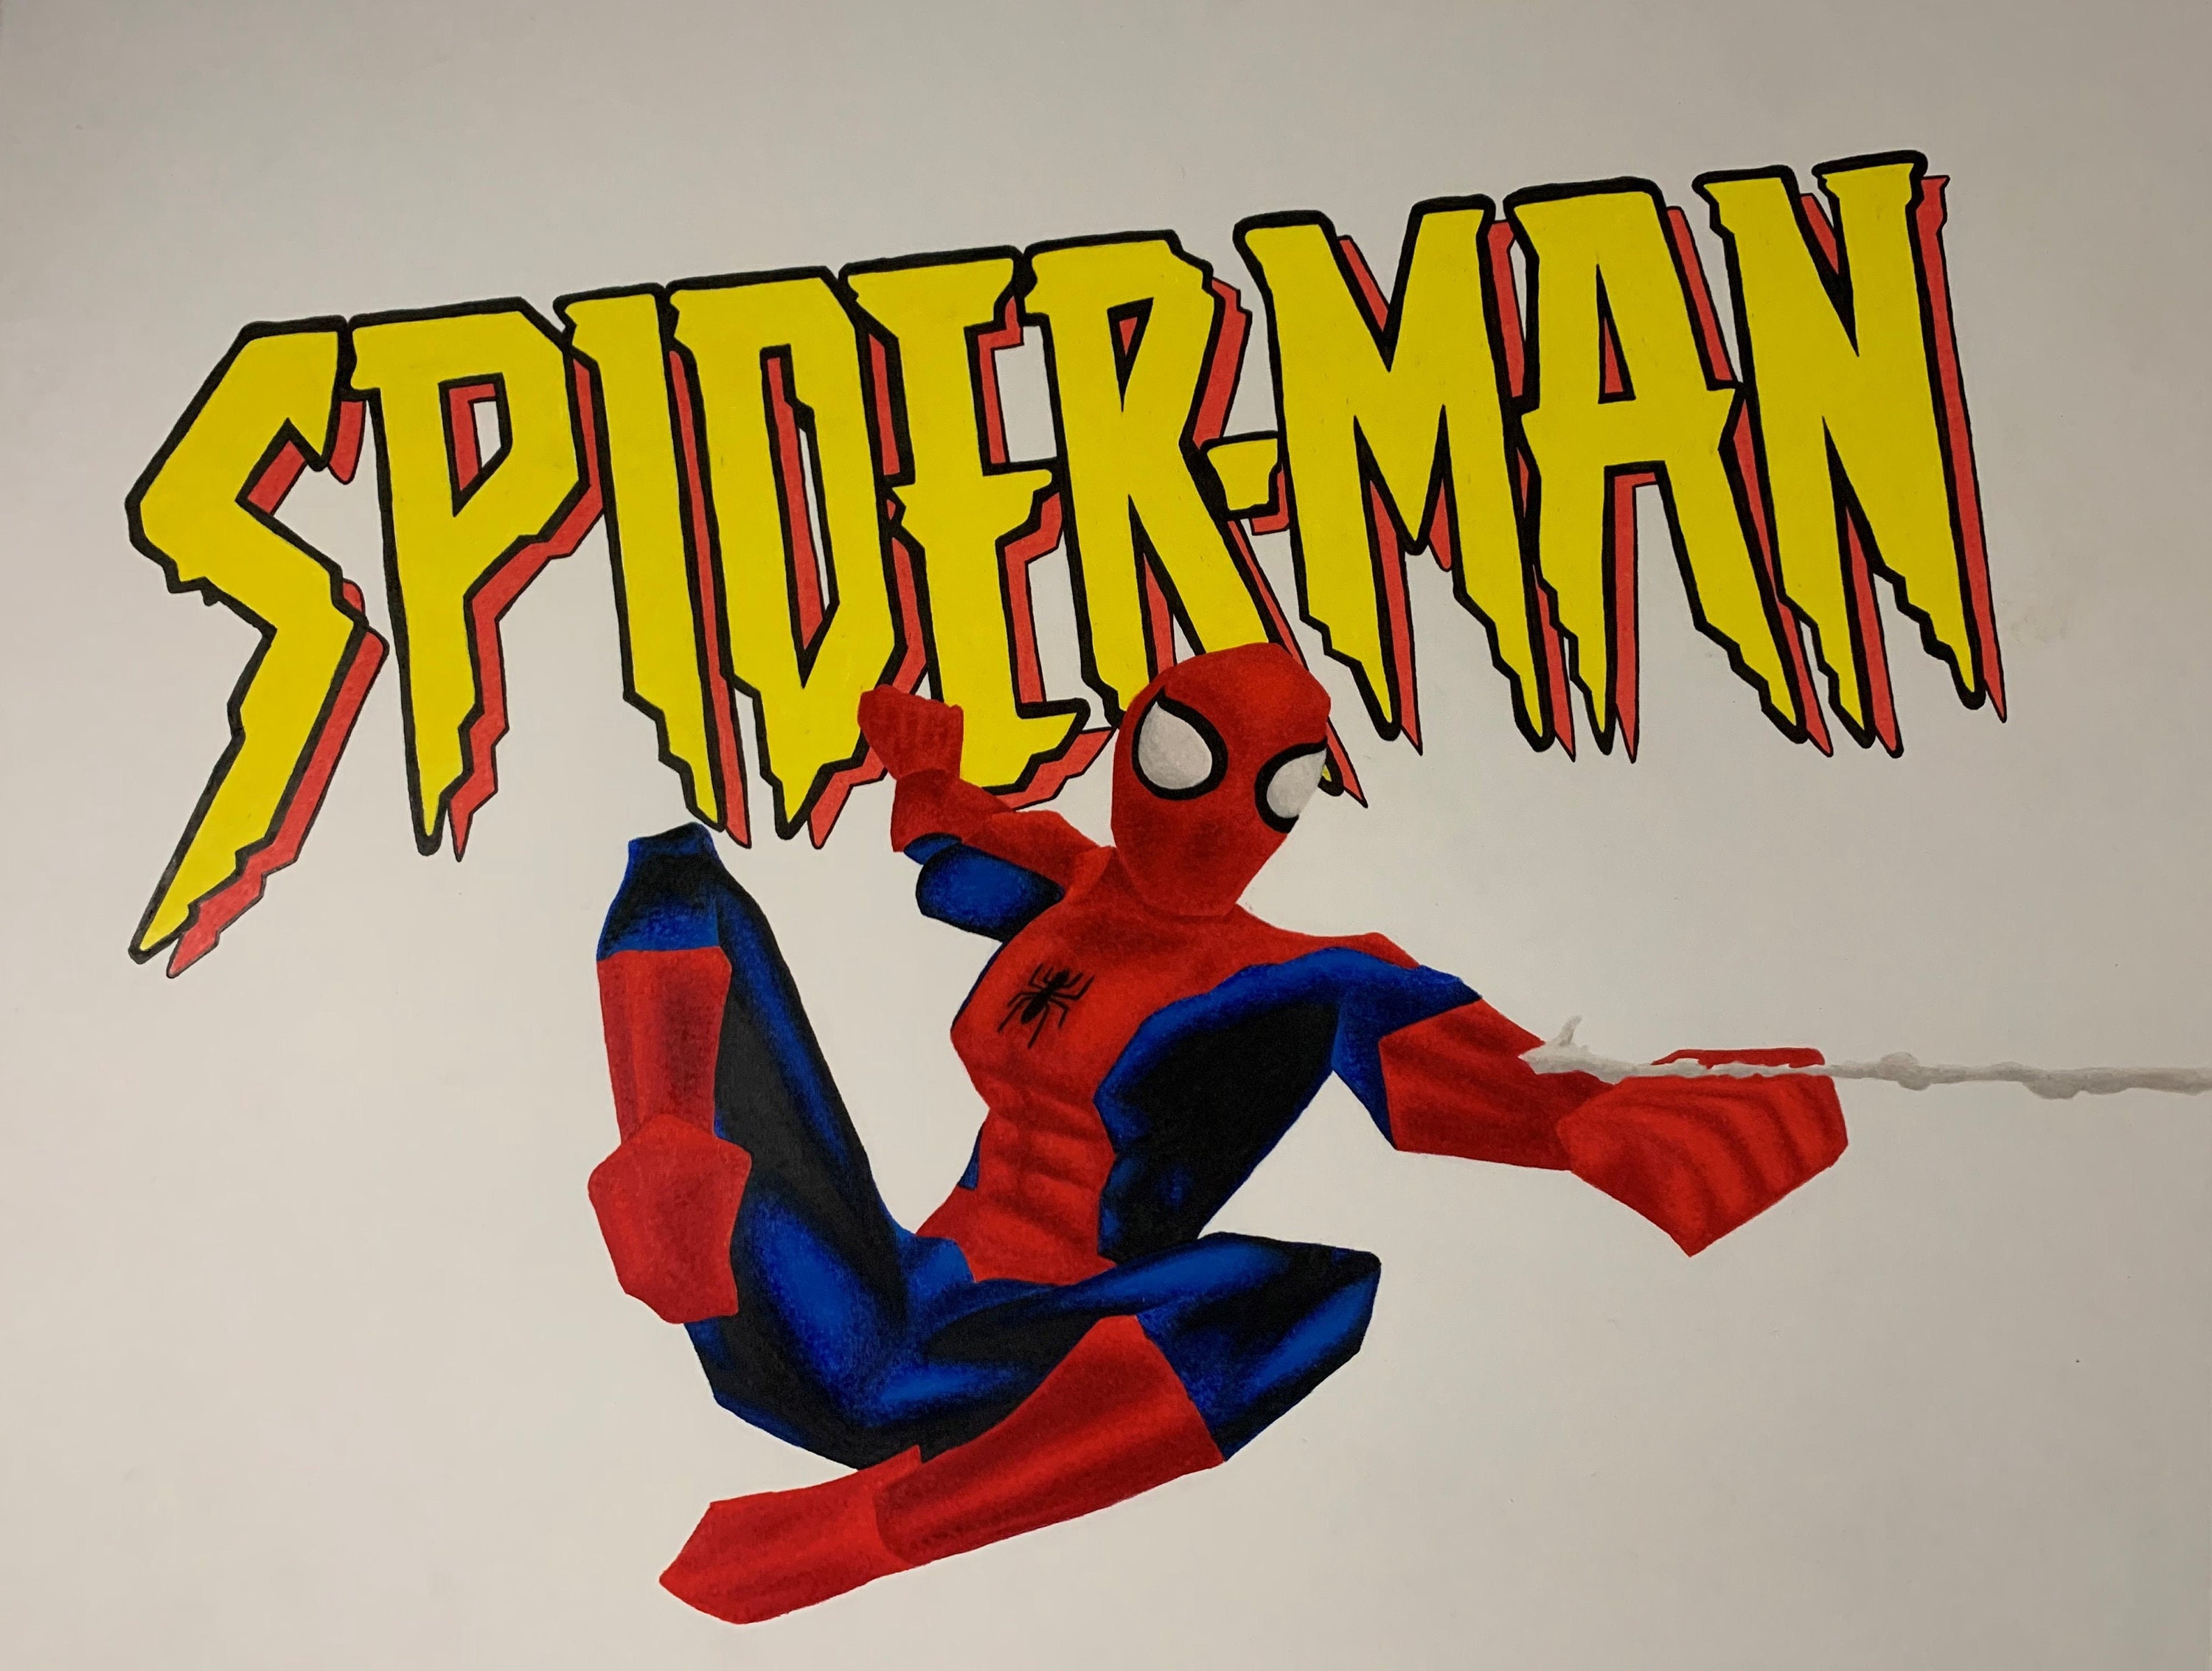 Spider-Man 2000 PC Game - Free Download Full Version